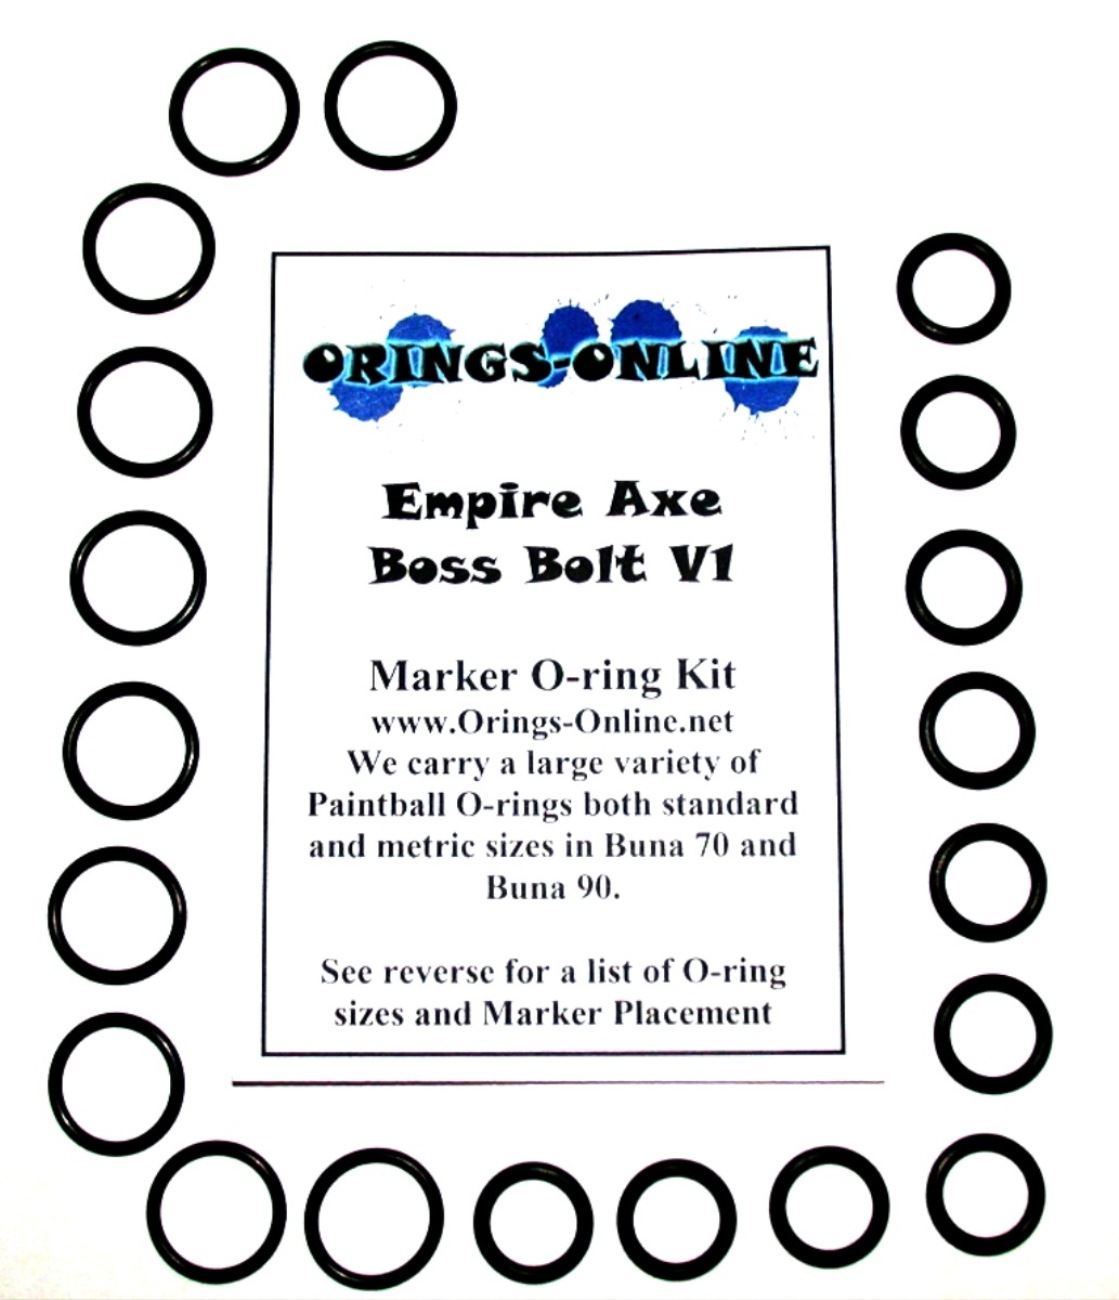 Empire Axe Boss Bolt V1 Marker O-ring Kit